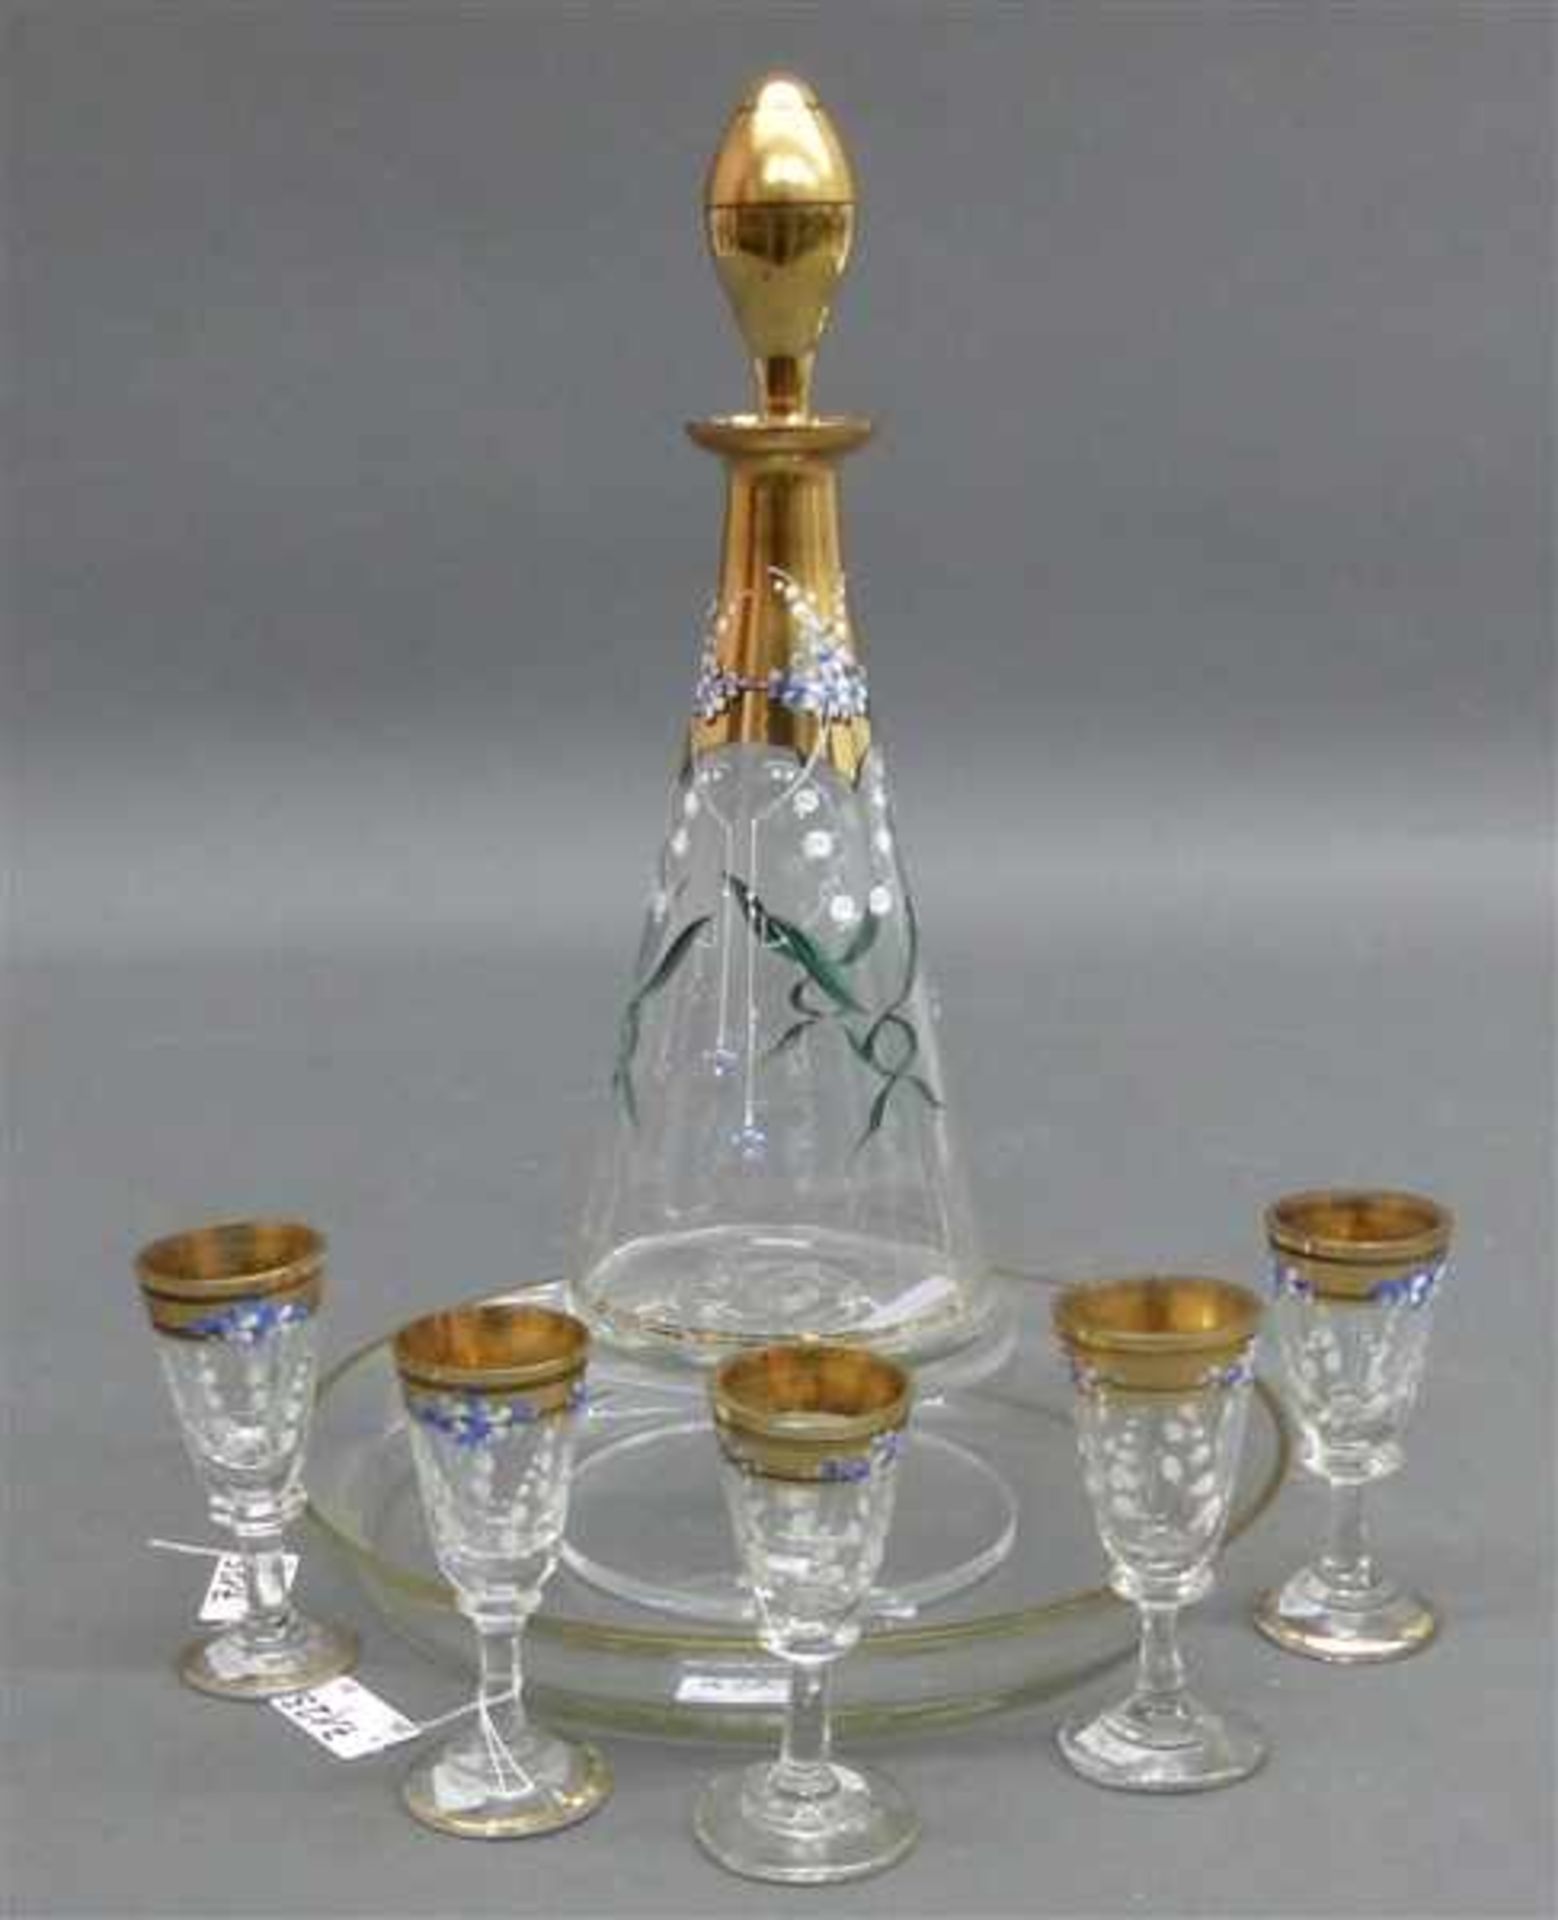 Likörgarniturfarbloses Glas, floraler Dekor, Goldrand, Stöpselflasche, 5 Stamperl, Tablett, um